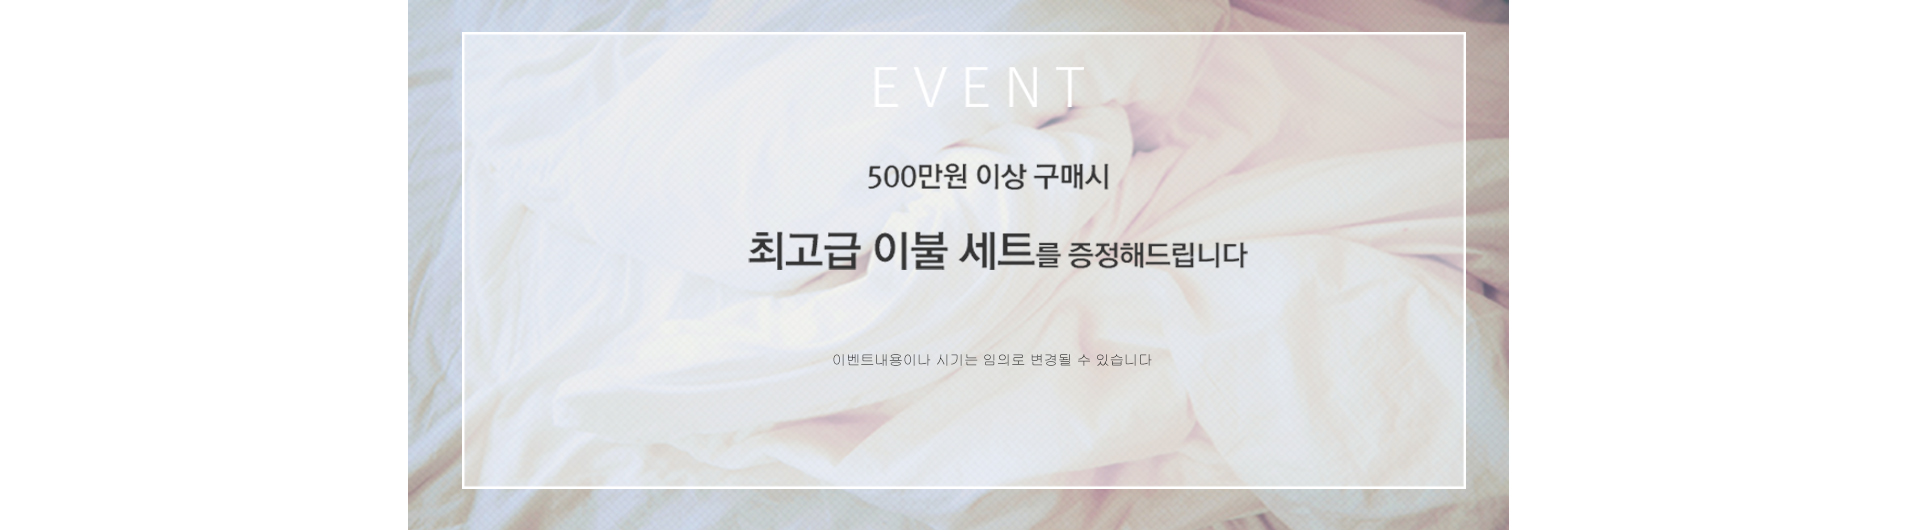 event-500